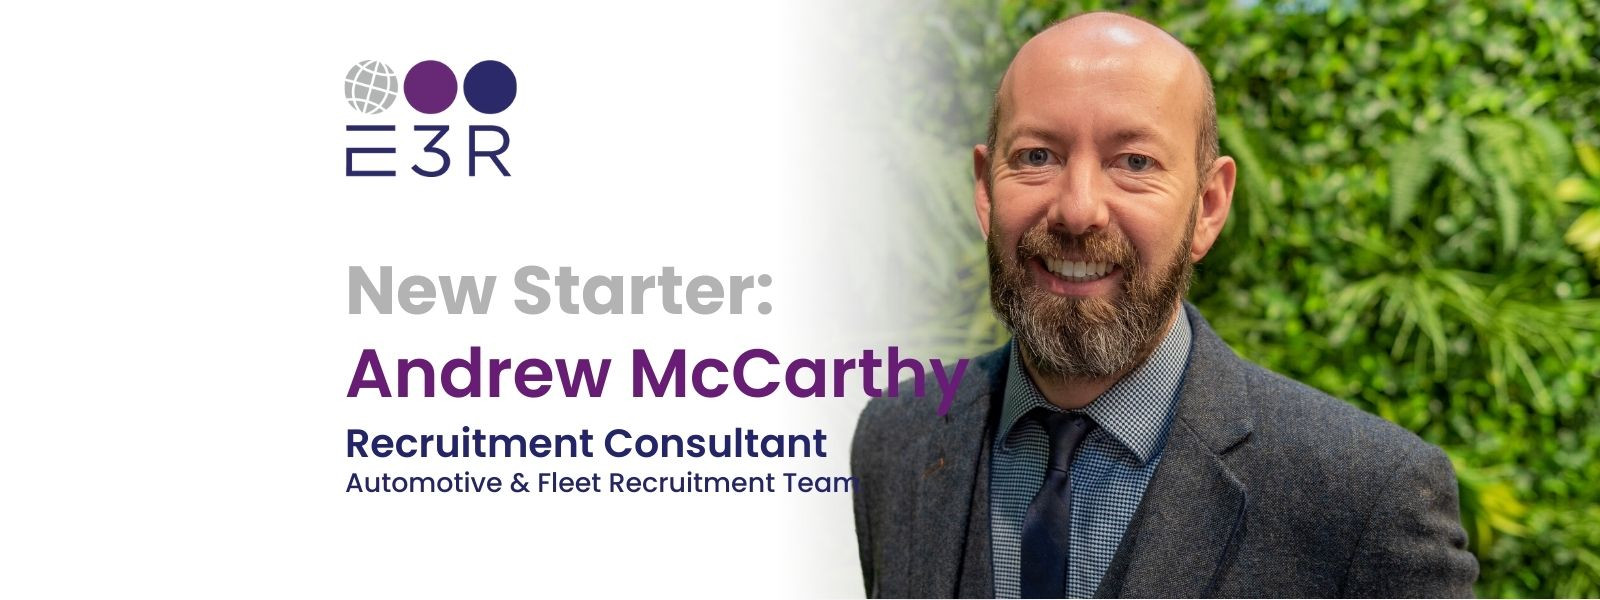 Automotive & Fleet Recruitment team welcomes new Recruitment Consultant, Andrew McCarthy